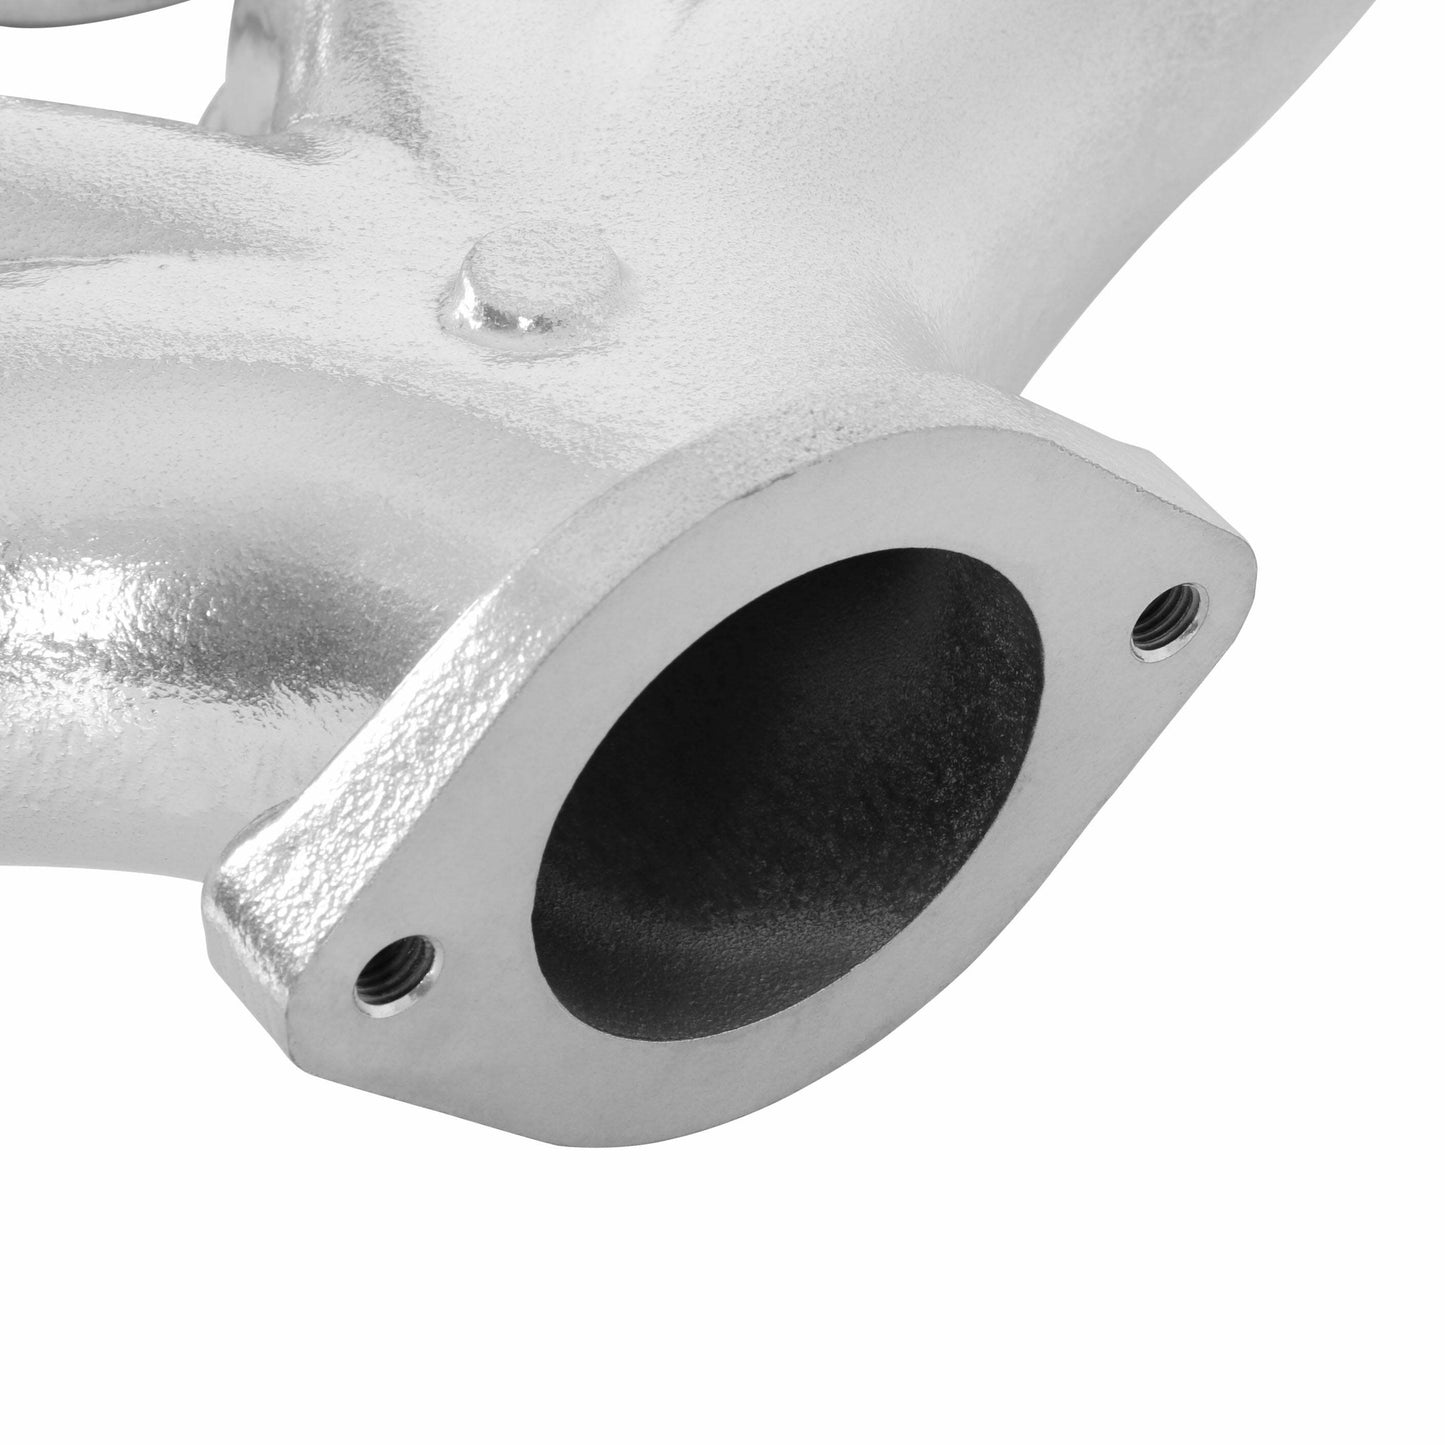 LS Swap Exhaust Manifolds -Center Dump-Silver Ceramic-Multi-Fit-2.50-8504-1HKR